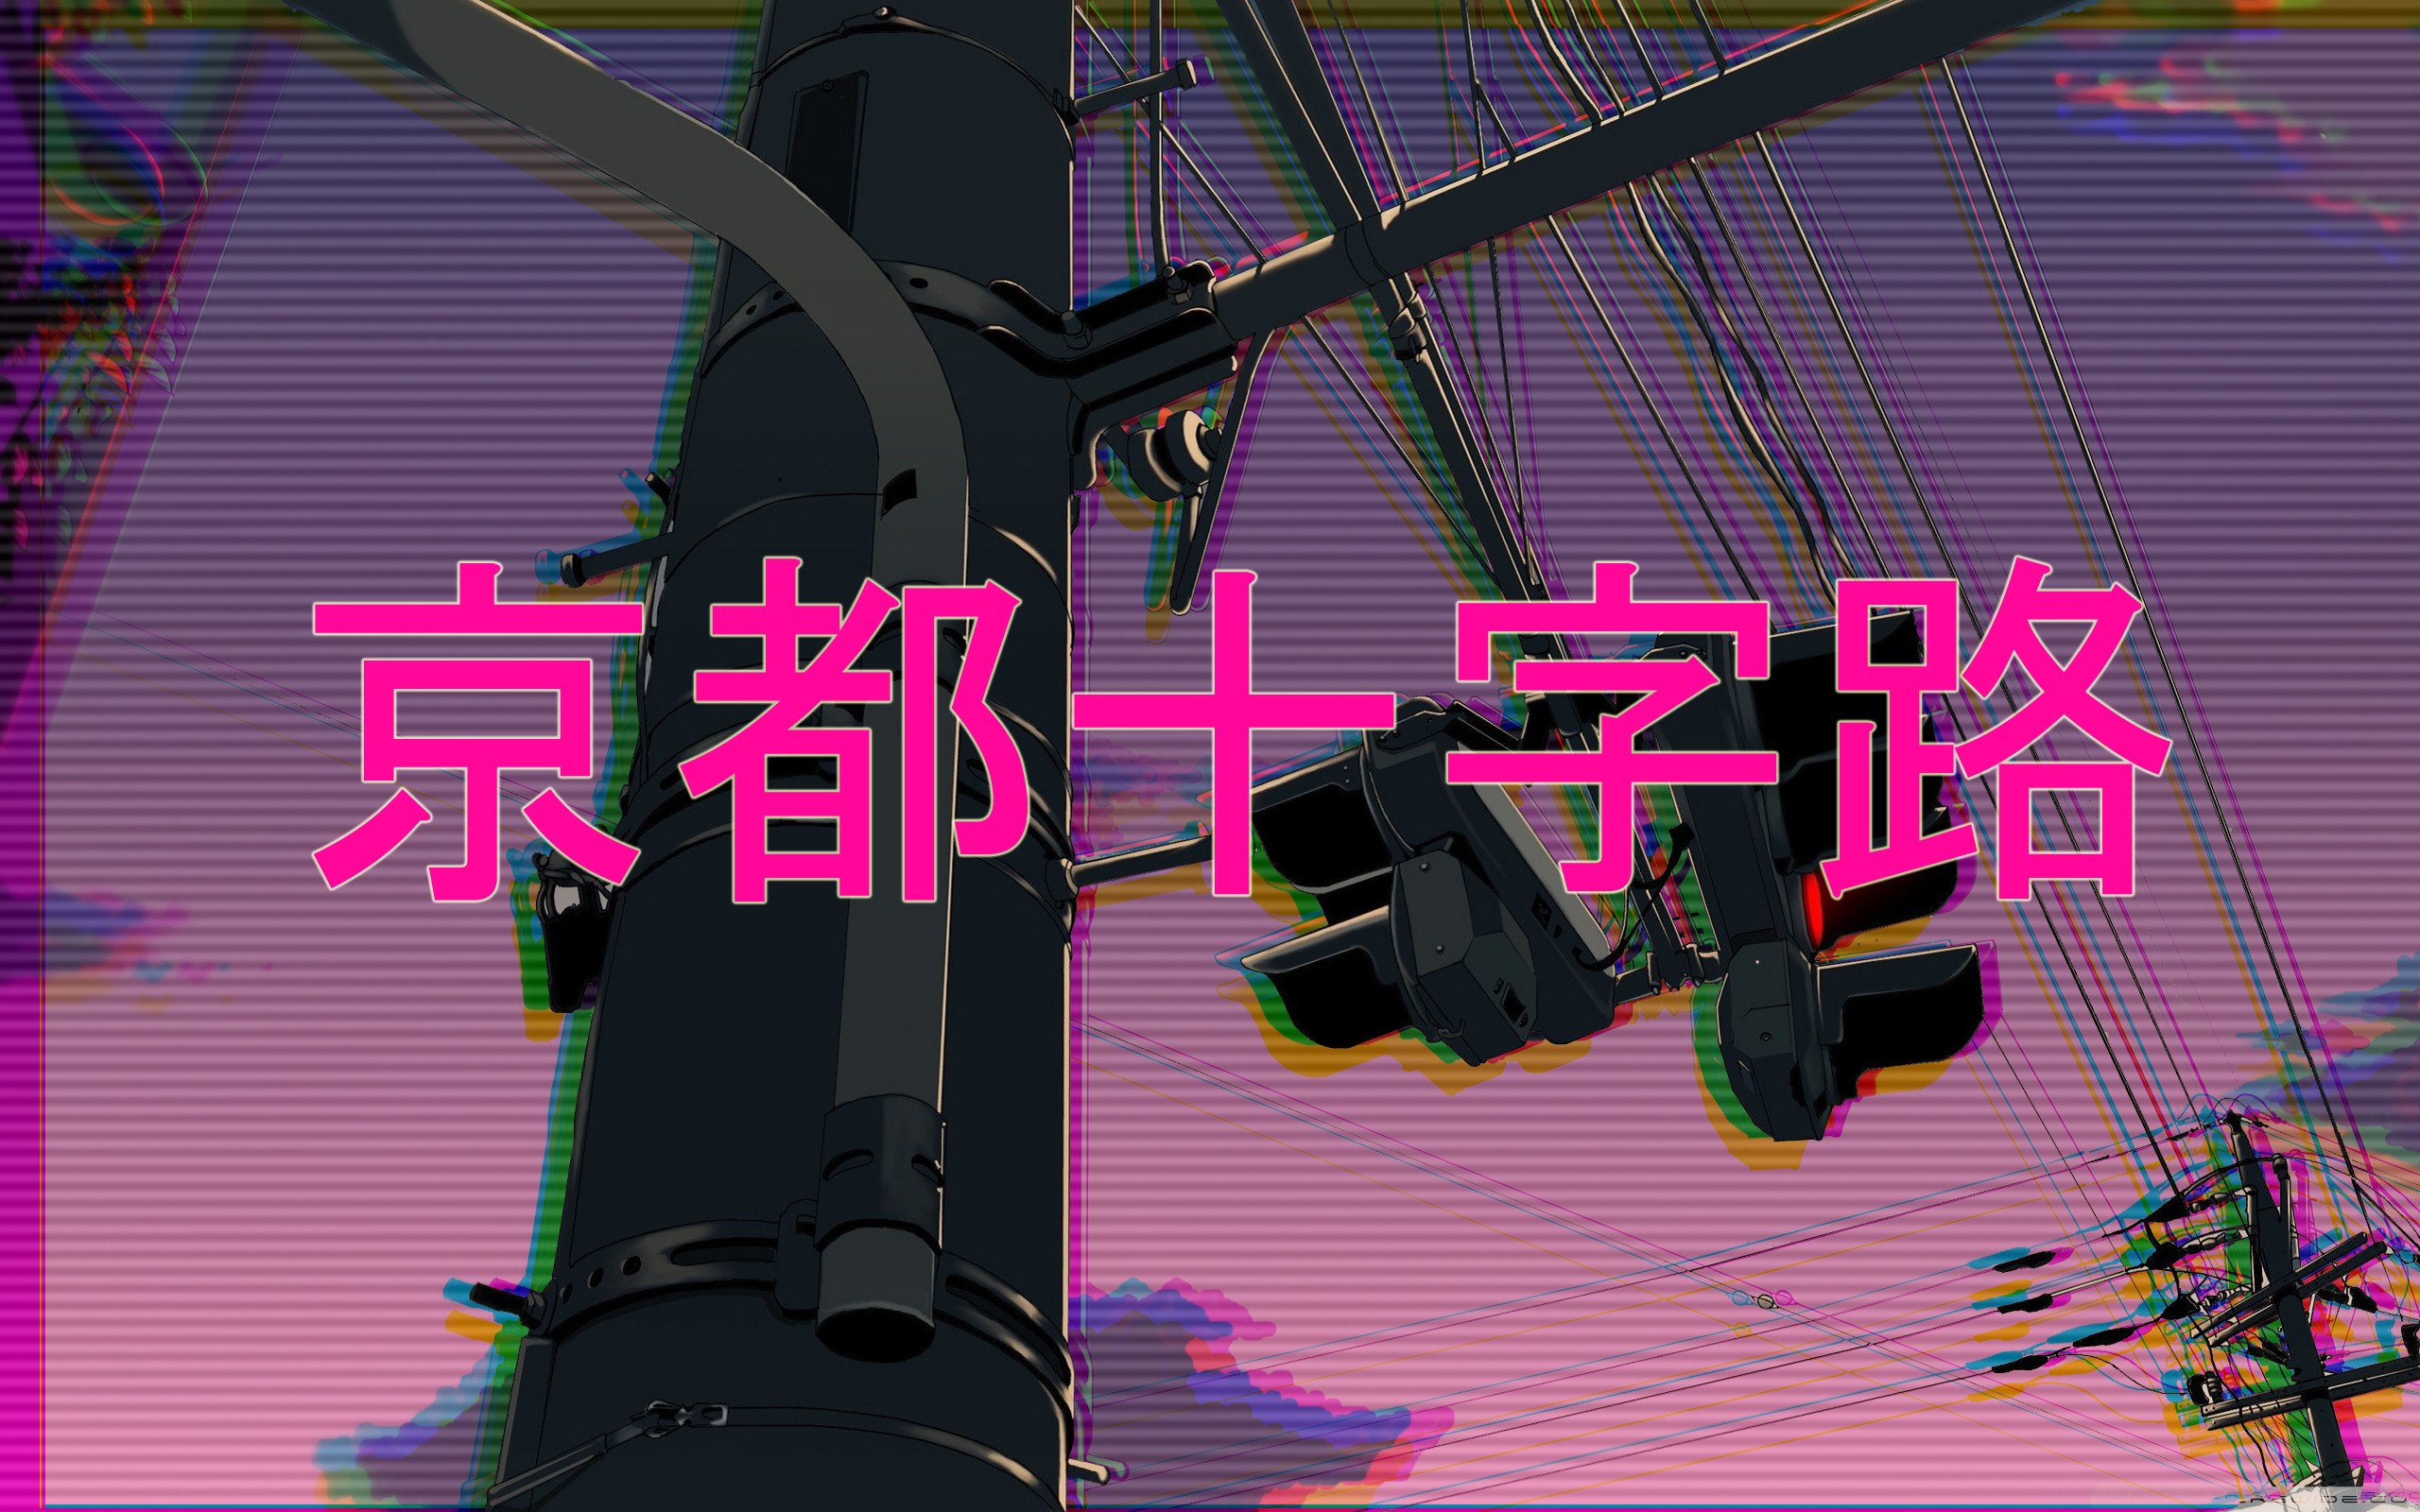 General 2560x1600 vaporwave 1980s 80sCity artwork glitch art low-angle traffic lights poles kanji digital art